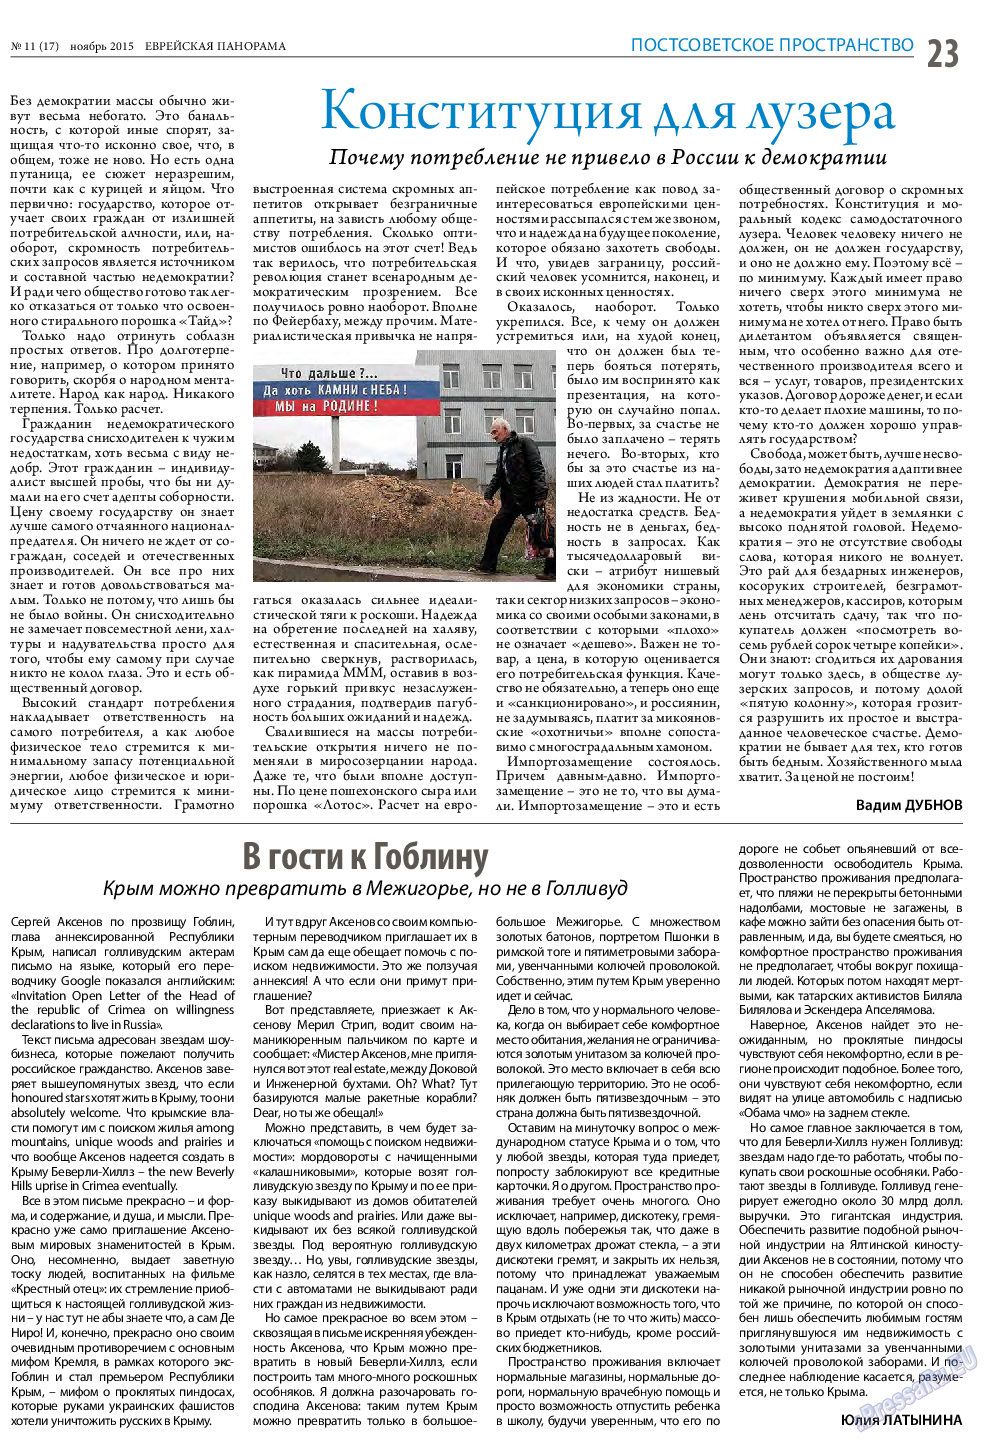 Еврейская панорама, газета. 2015 №11 стр.23